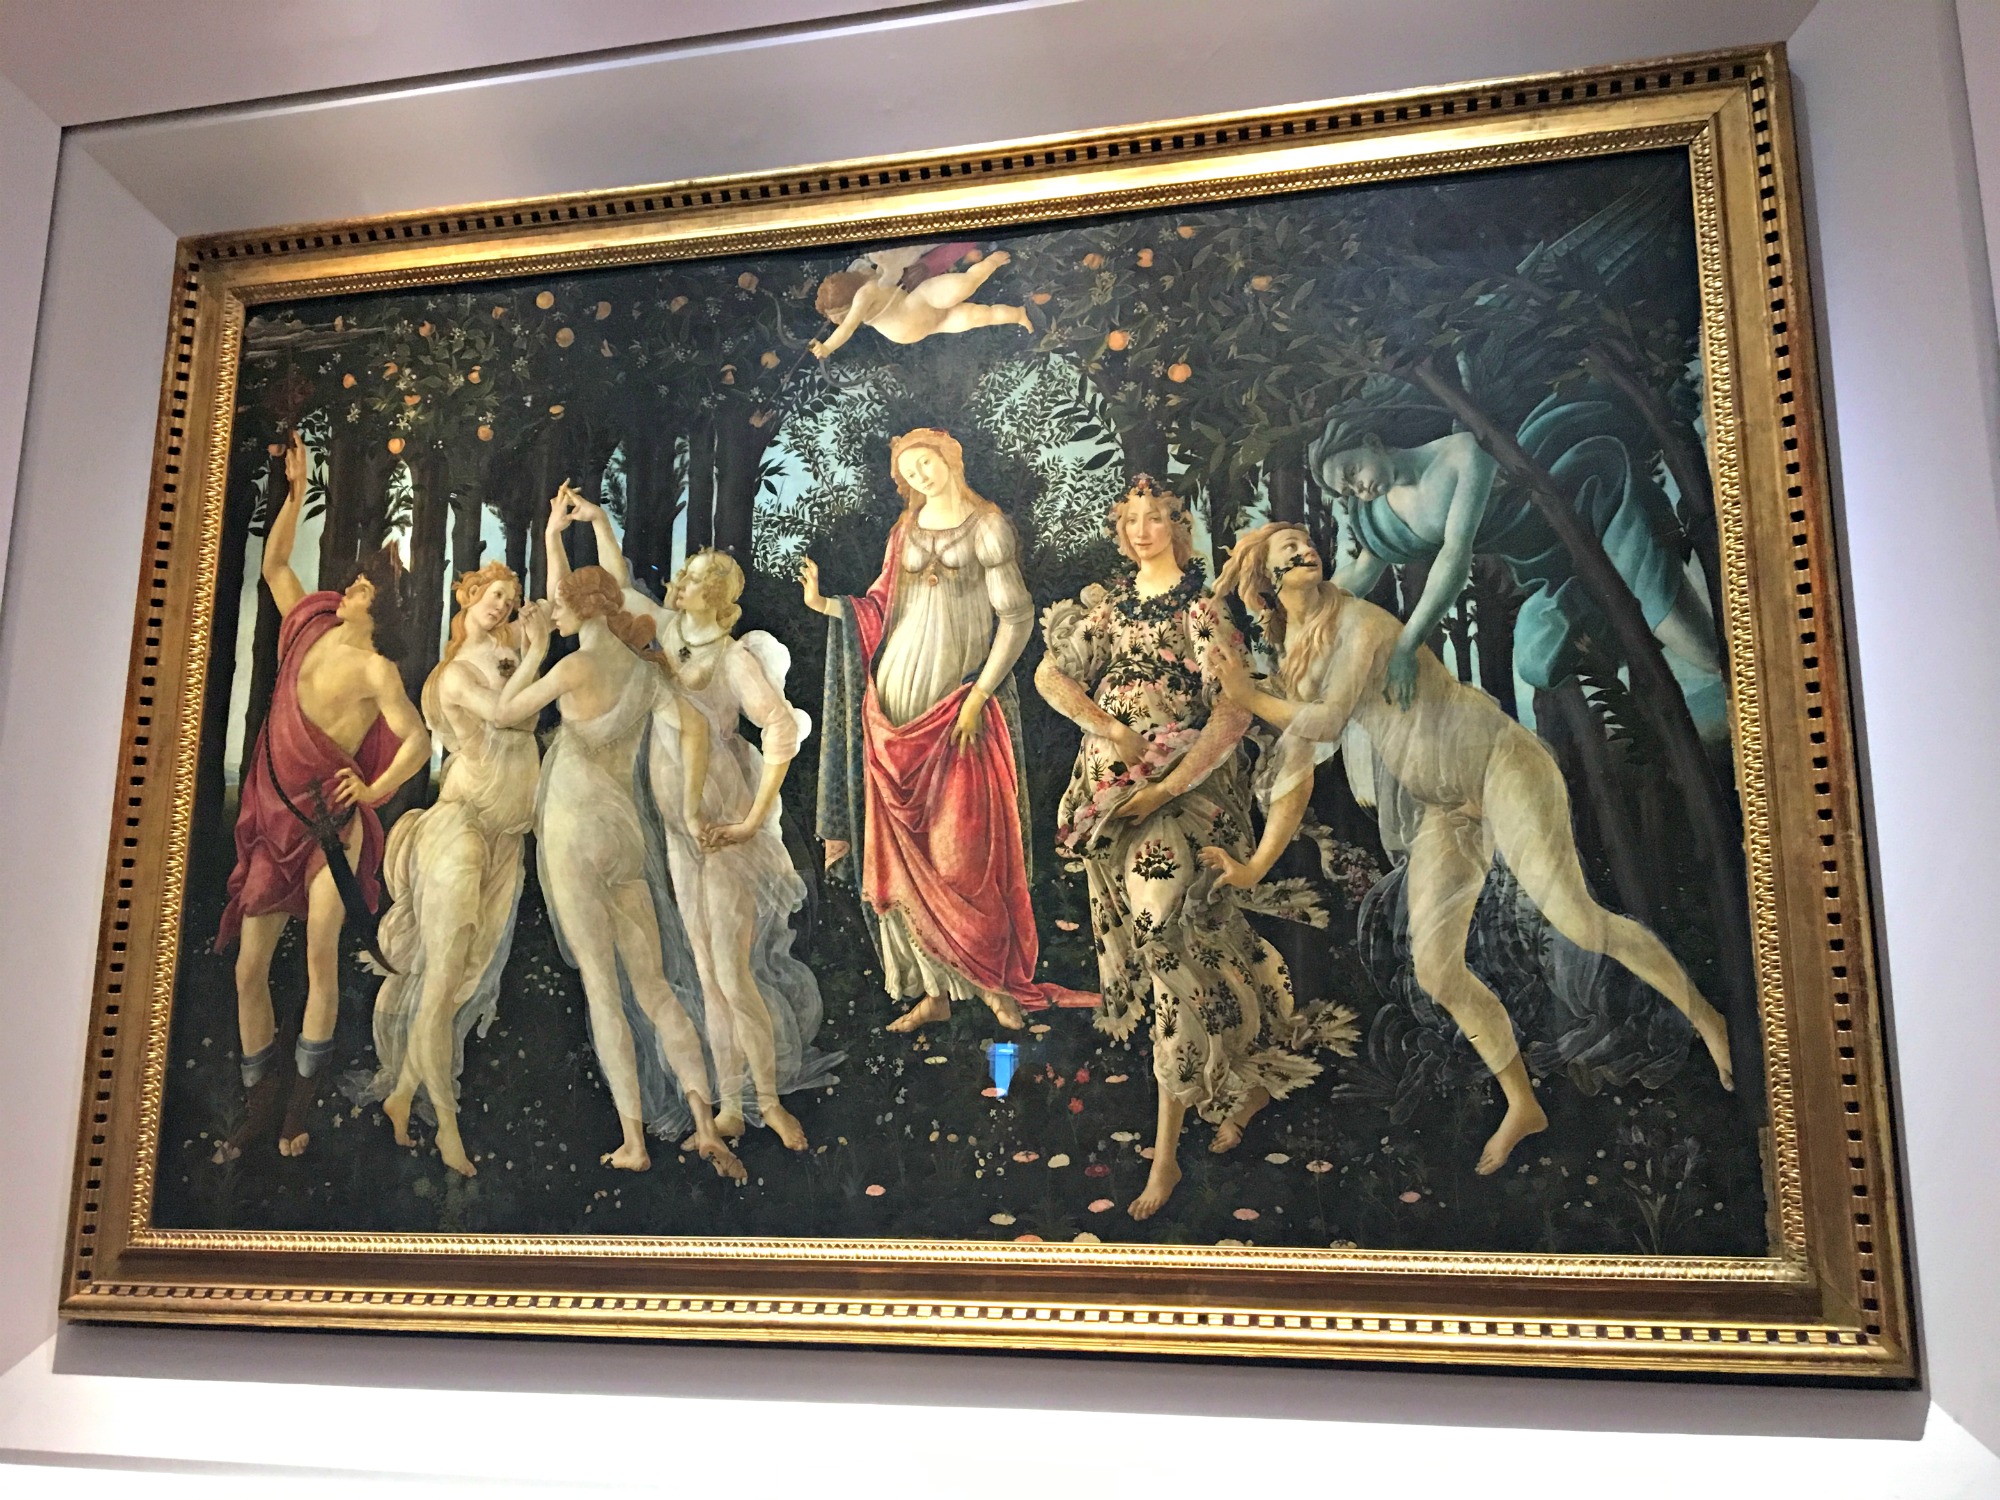 Uffizi gallery tour Florence: Sandro Botticelli Primavera